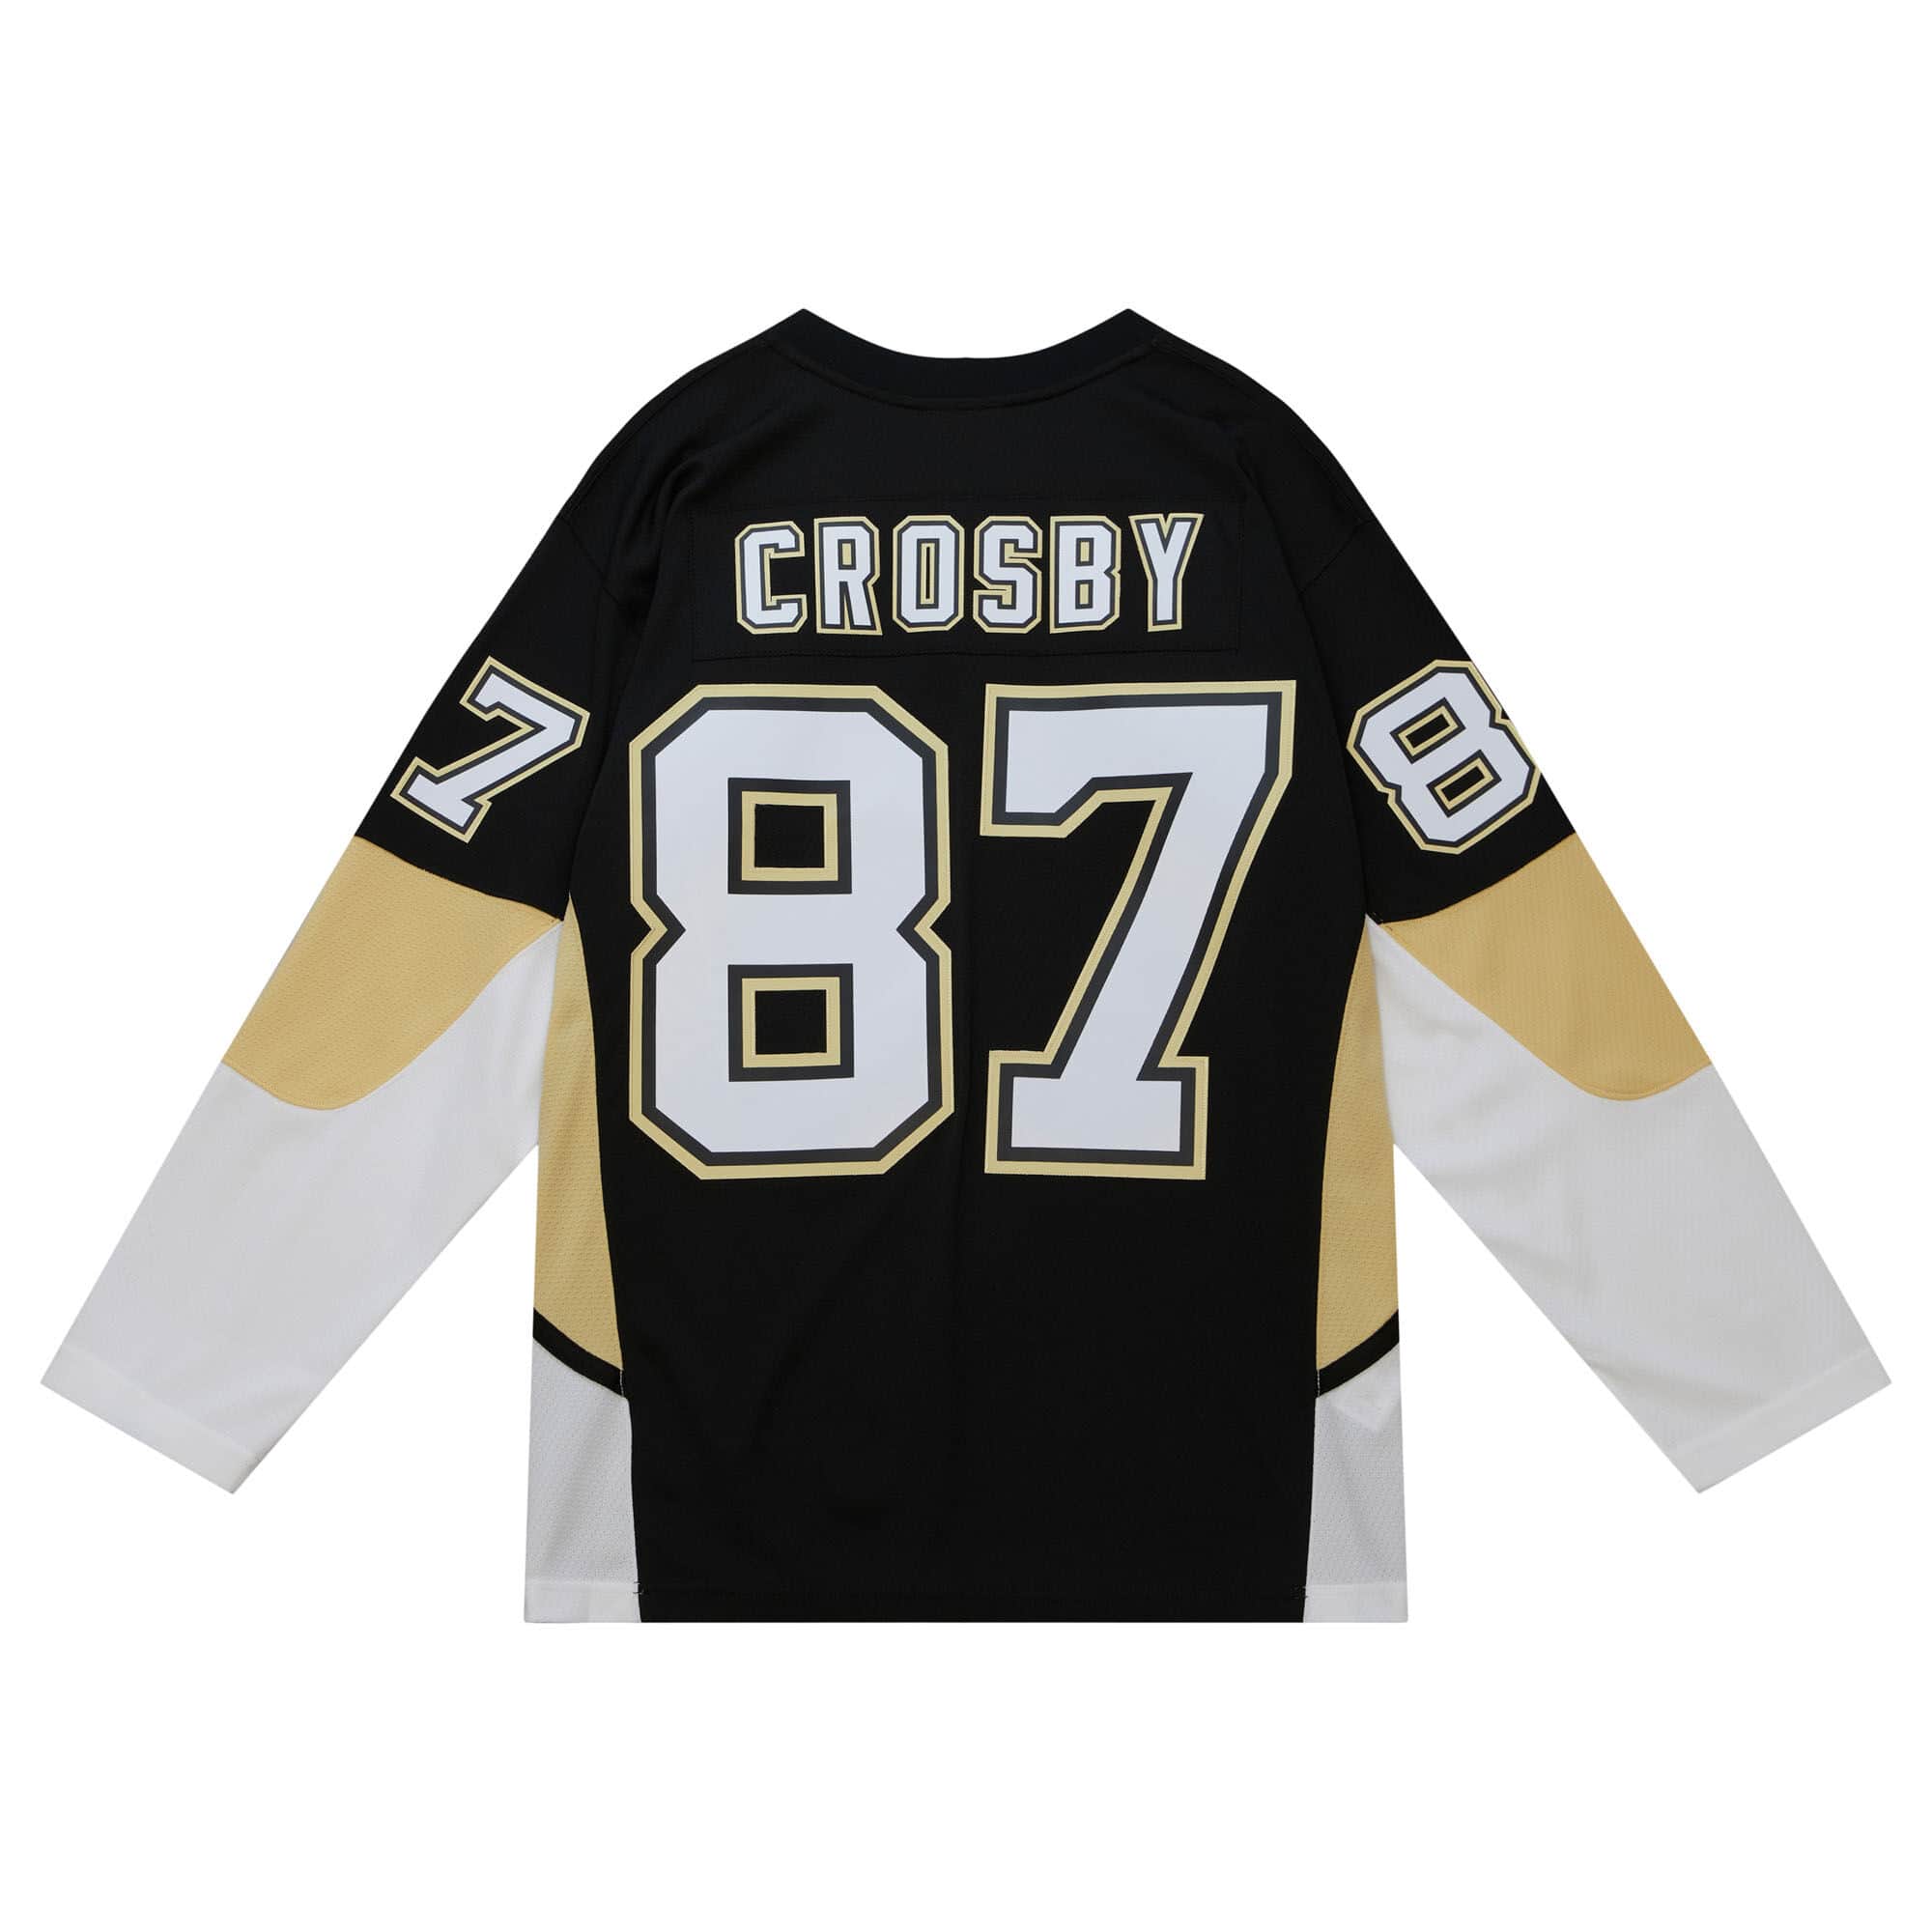 NHL Pittsburgh Penguins Sidney Crosby Hockey Jersey